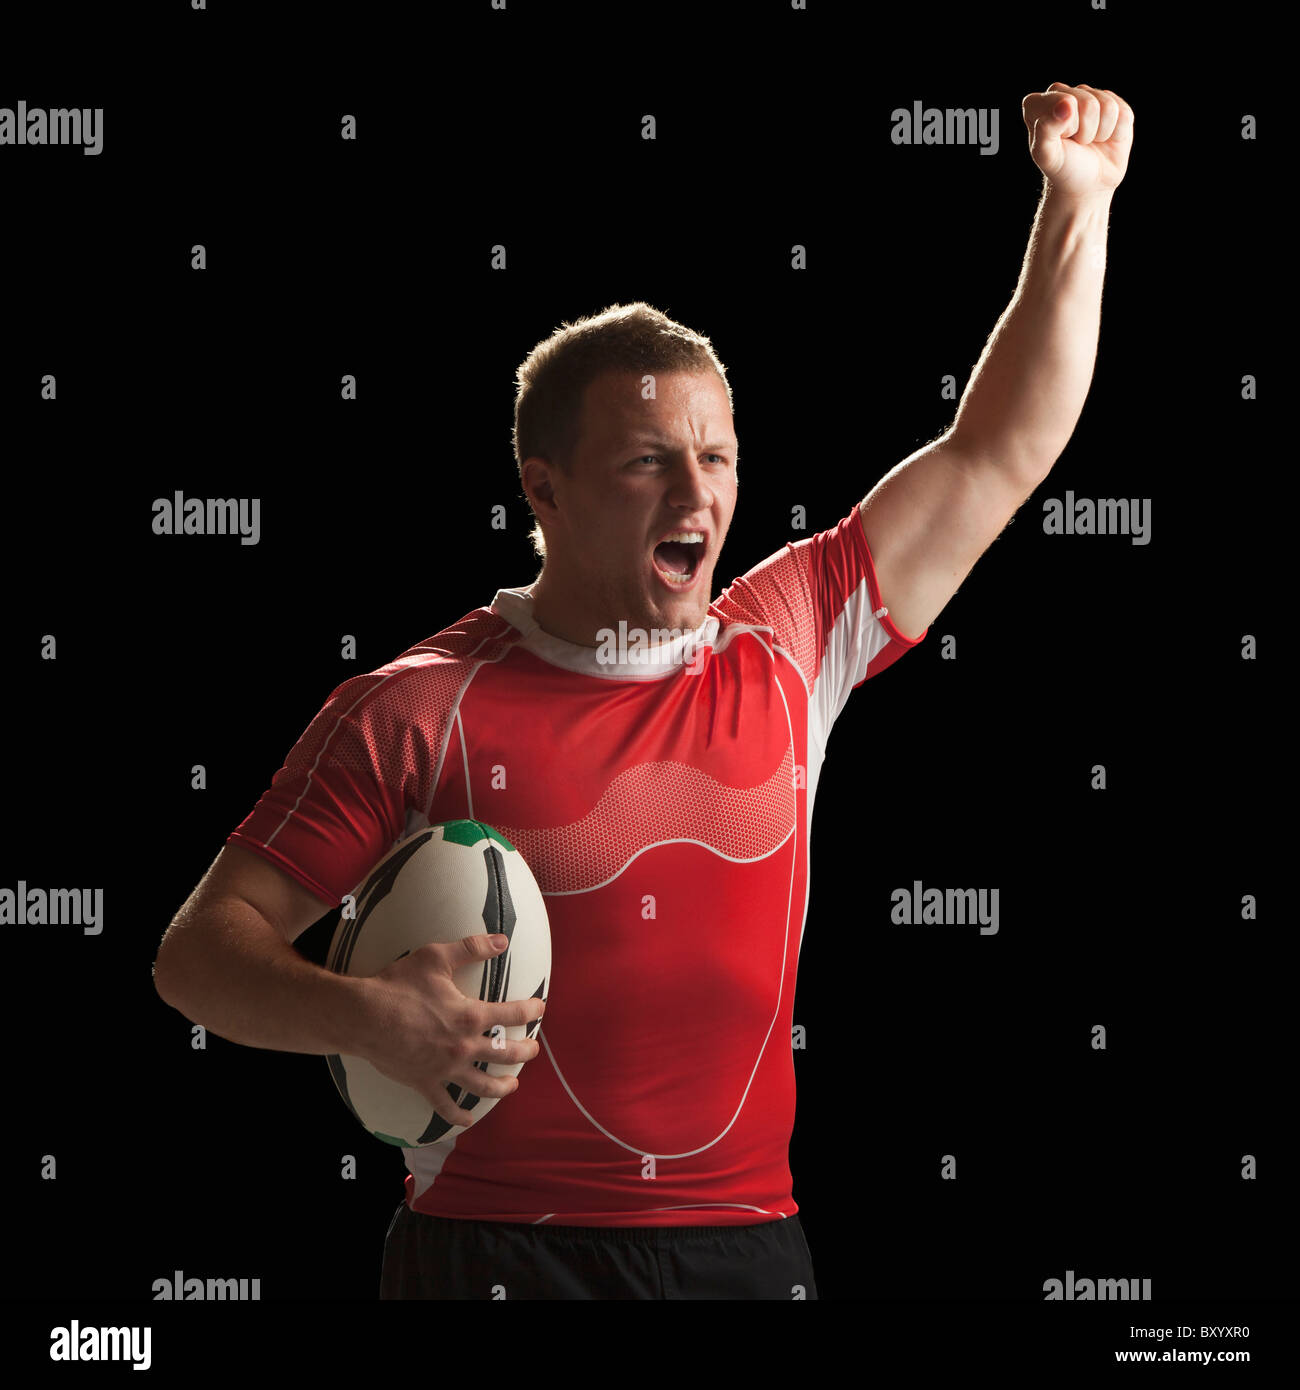 Homme rugby player holding ball, célébrer Banque D'Images